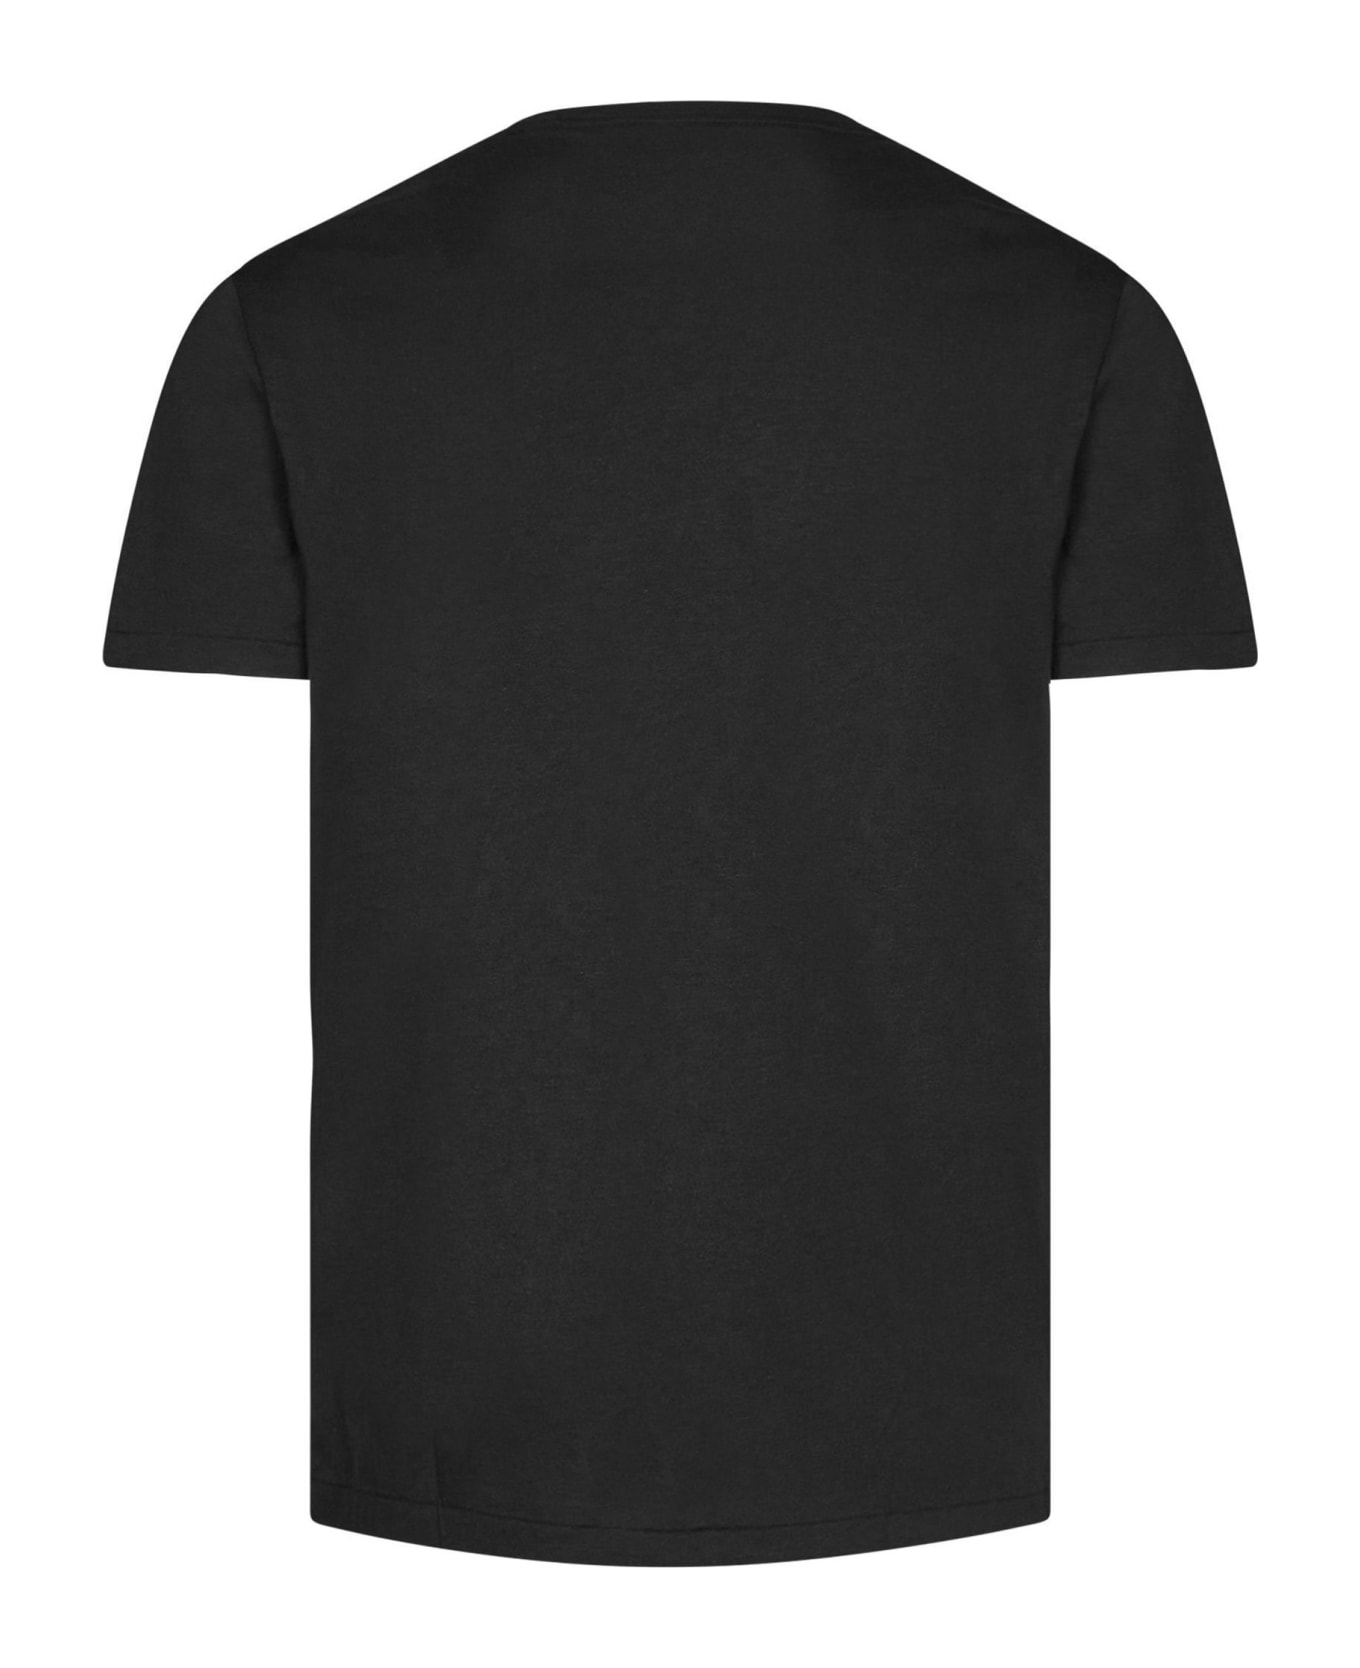 Kired Black Jersey Cotton T-shirt - Black